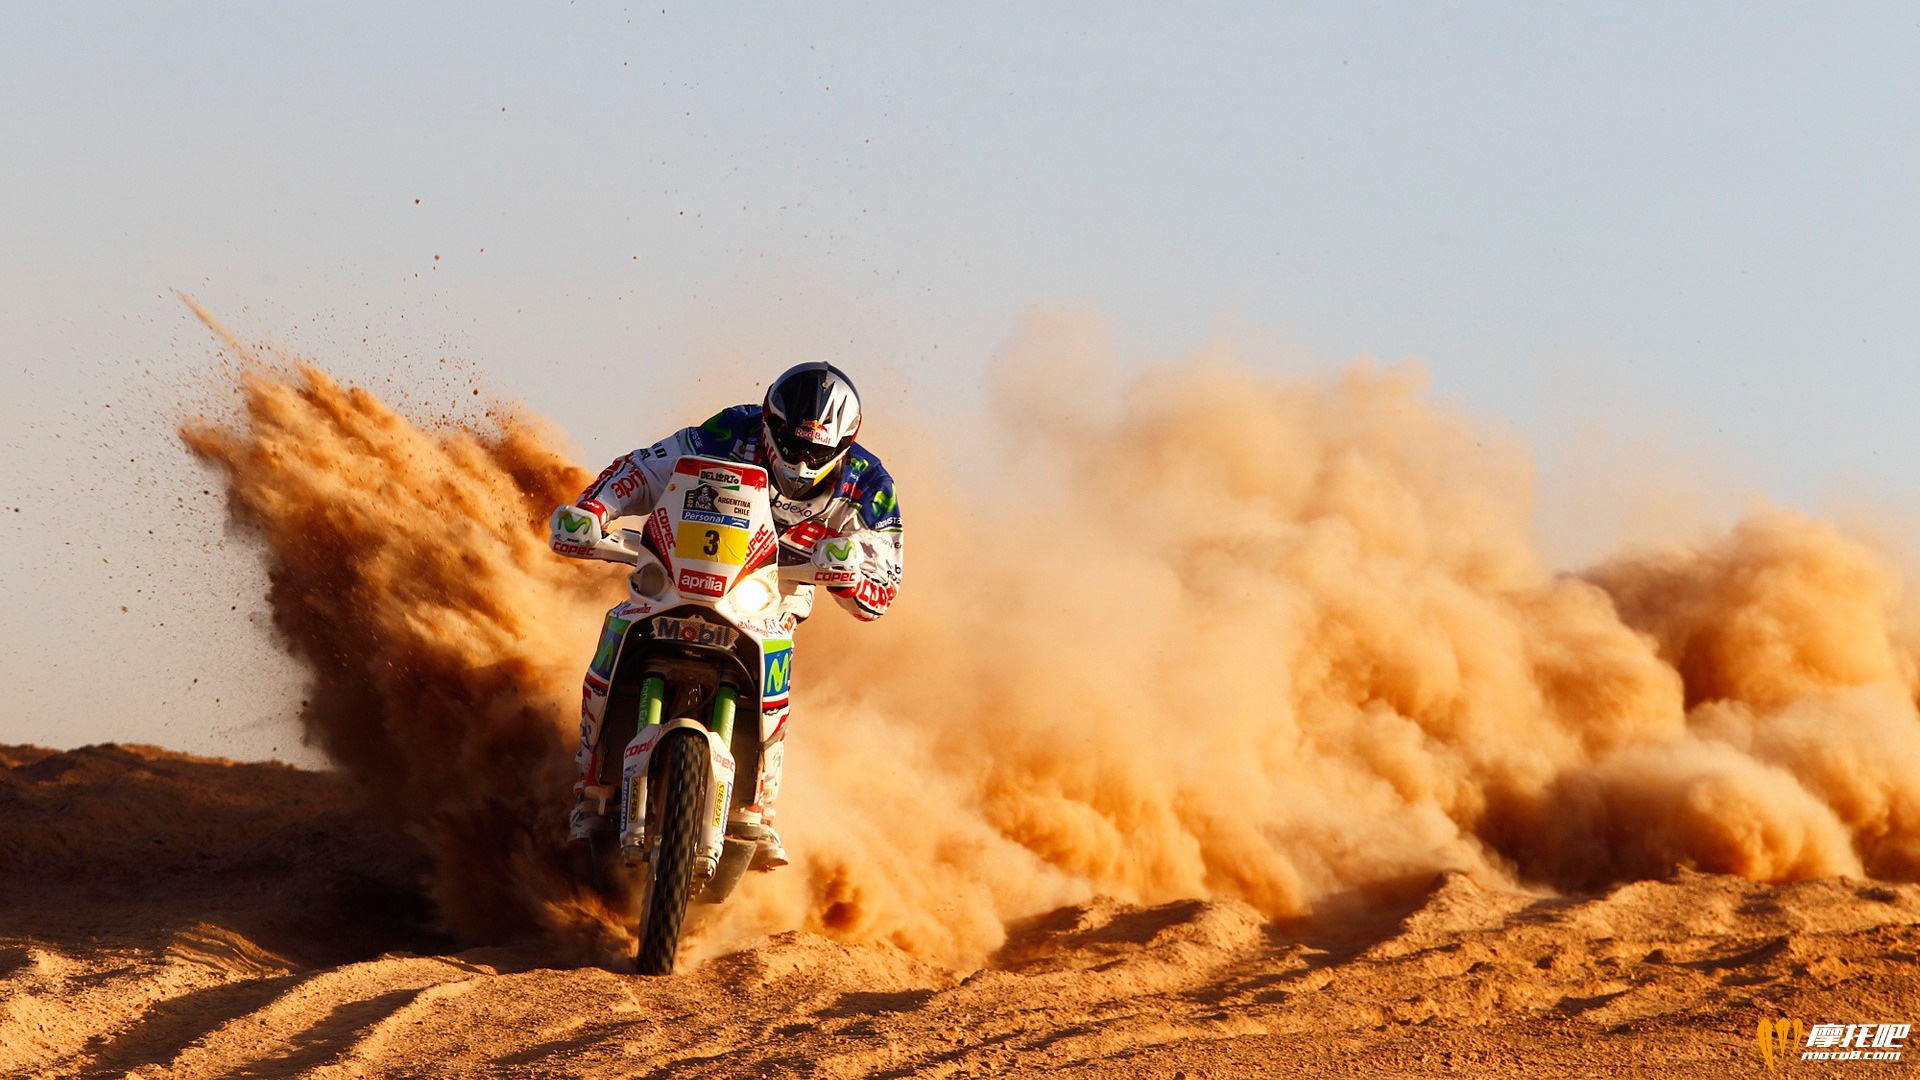 Barreda-Bort-Honda-in-Dakar-Rally-2014-Wallpaper.jpg